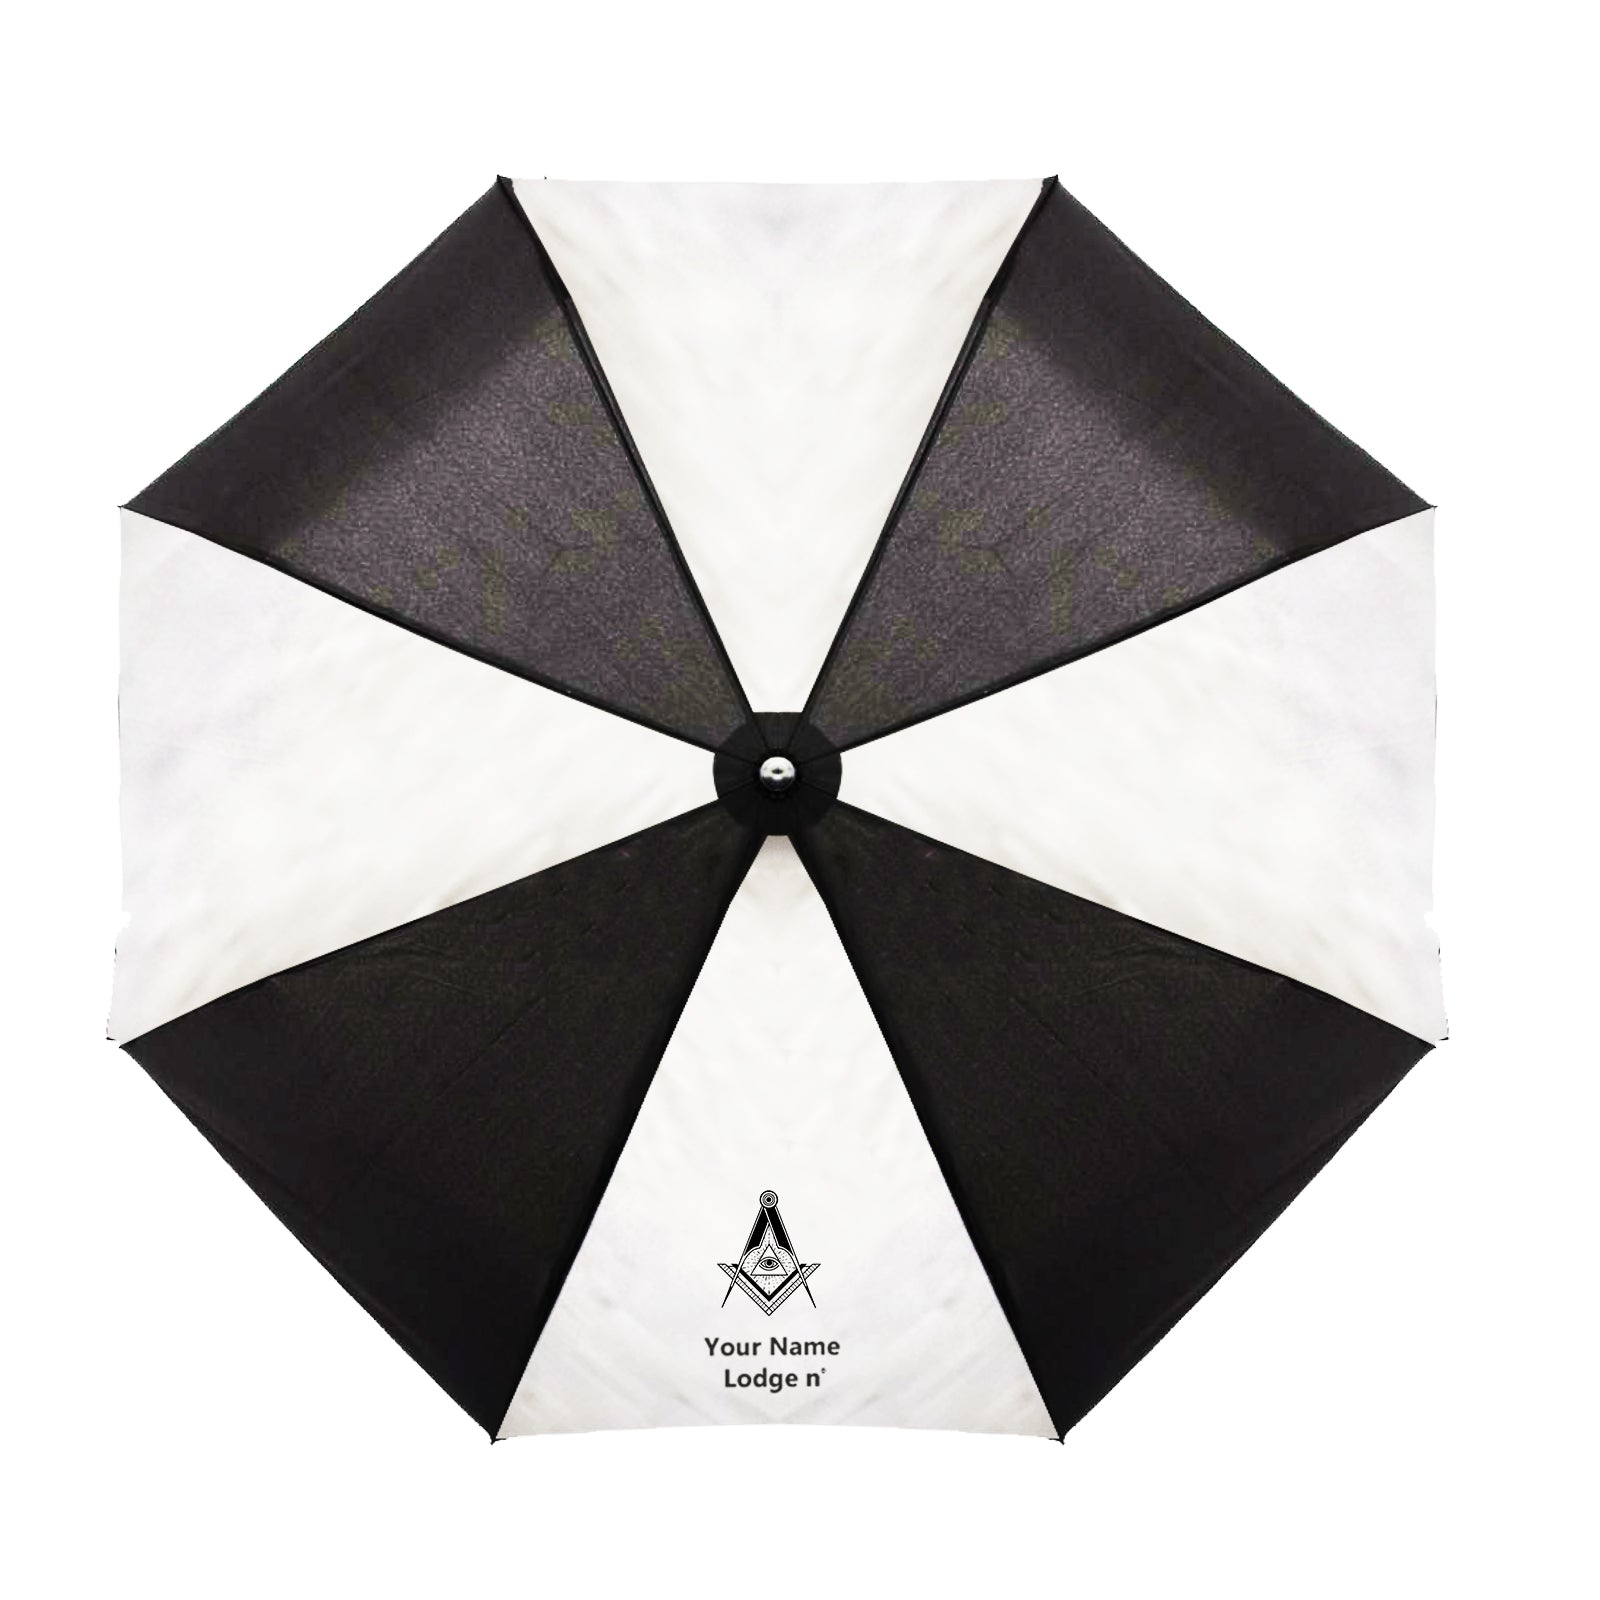 Master Mason Blue Lodge Umbrella - Wings Down Three Folding Windproof - Bricks Masons